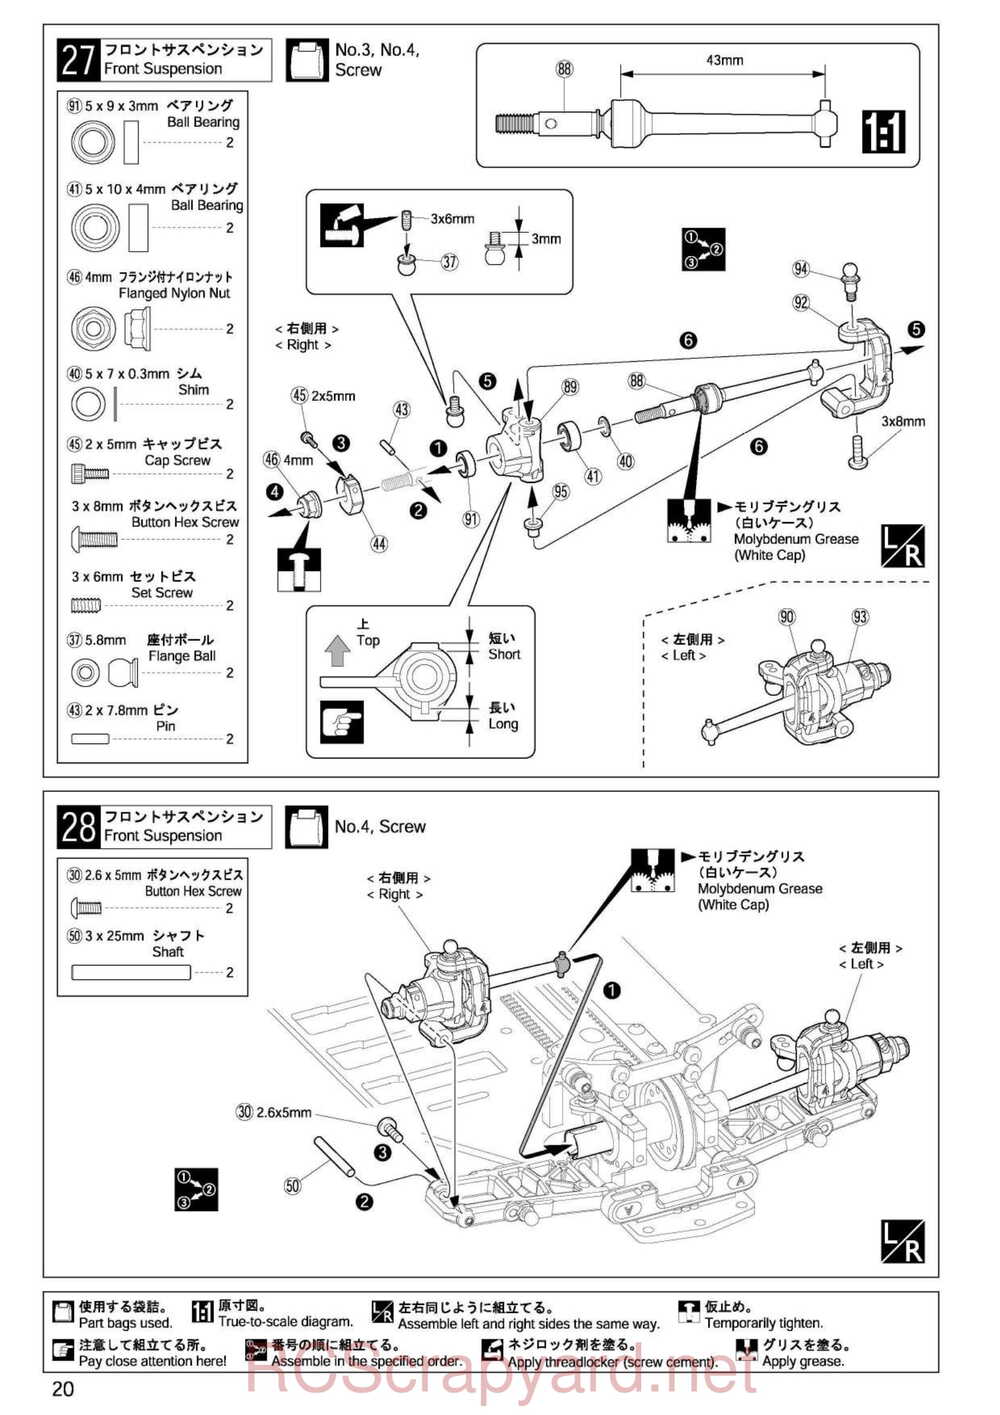 Kyosho - 30023 - Stalion-Shin - Manual - Page 20